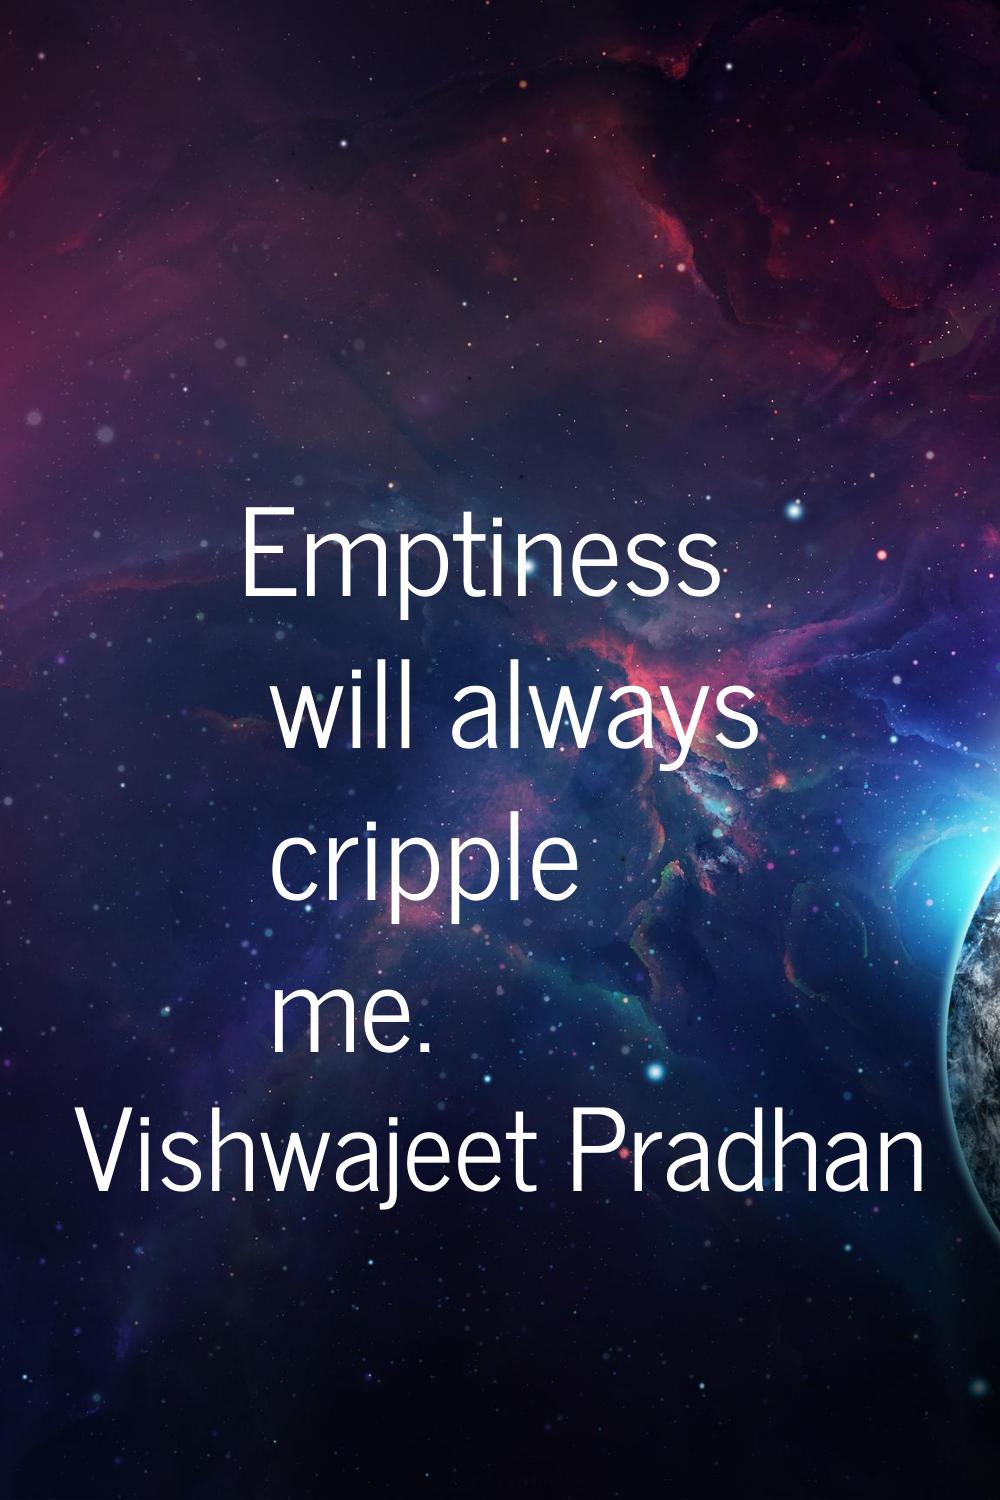 Emptiness will always cripple me.